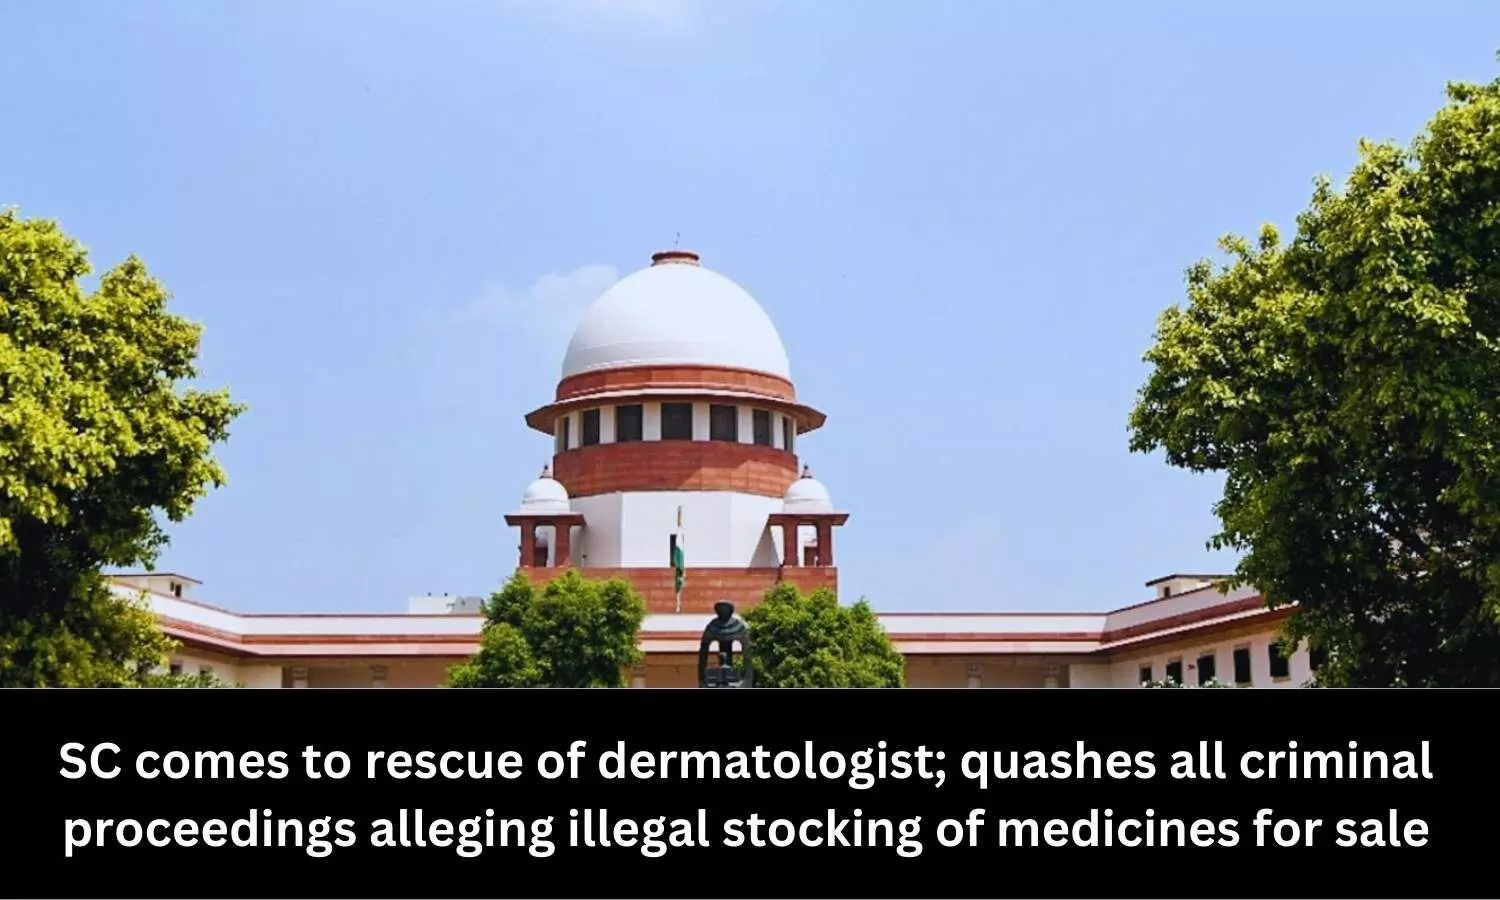 SC quashes criminal proceedings against dermatologist accused of stocking medicines for sale